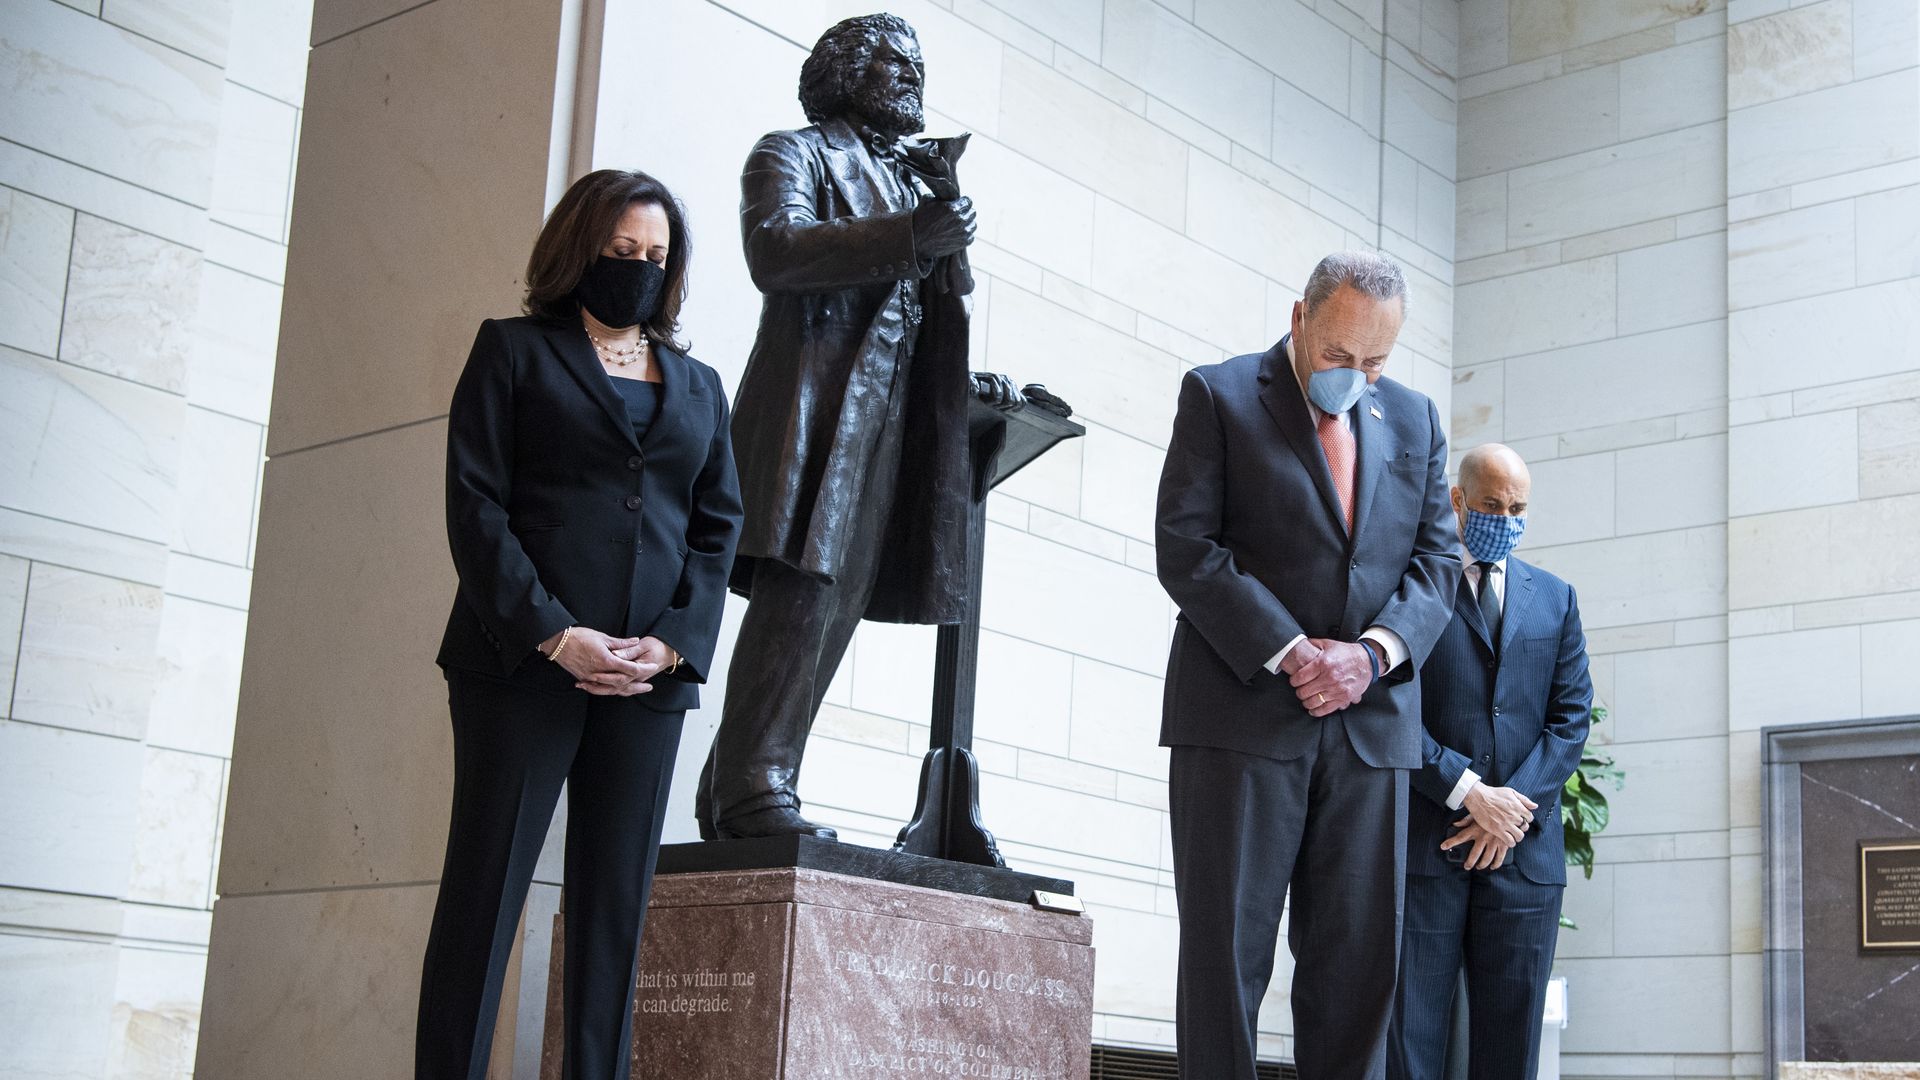 From left, Sen. Kamala Harris, D-Calif., Senate Minority Leader Charles Schumer, D-N.Y., and Sen. Cory Booker, D-N.J. bow their heads